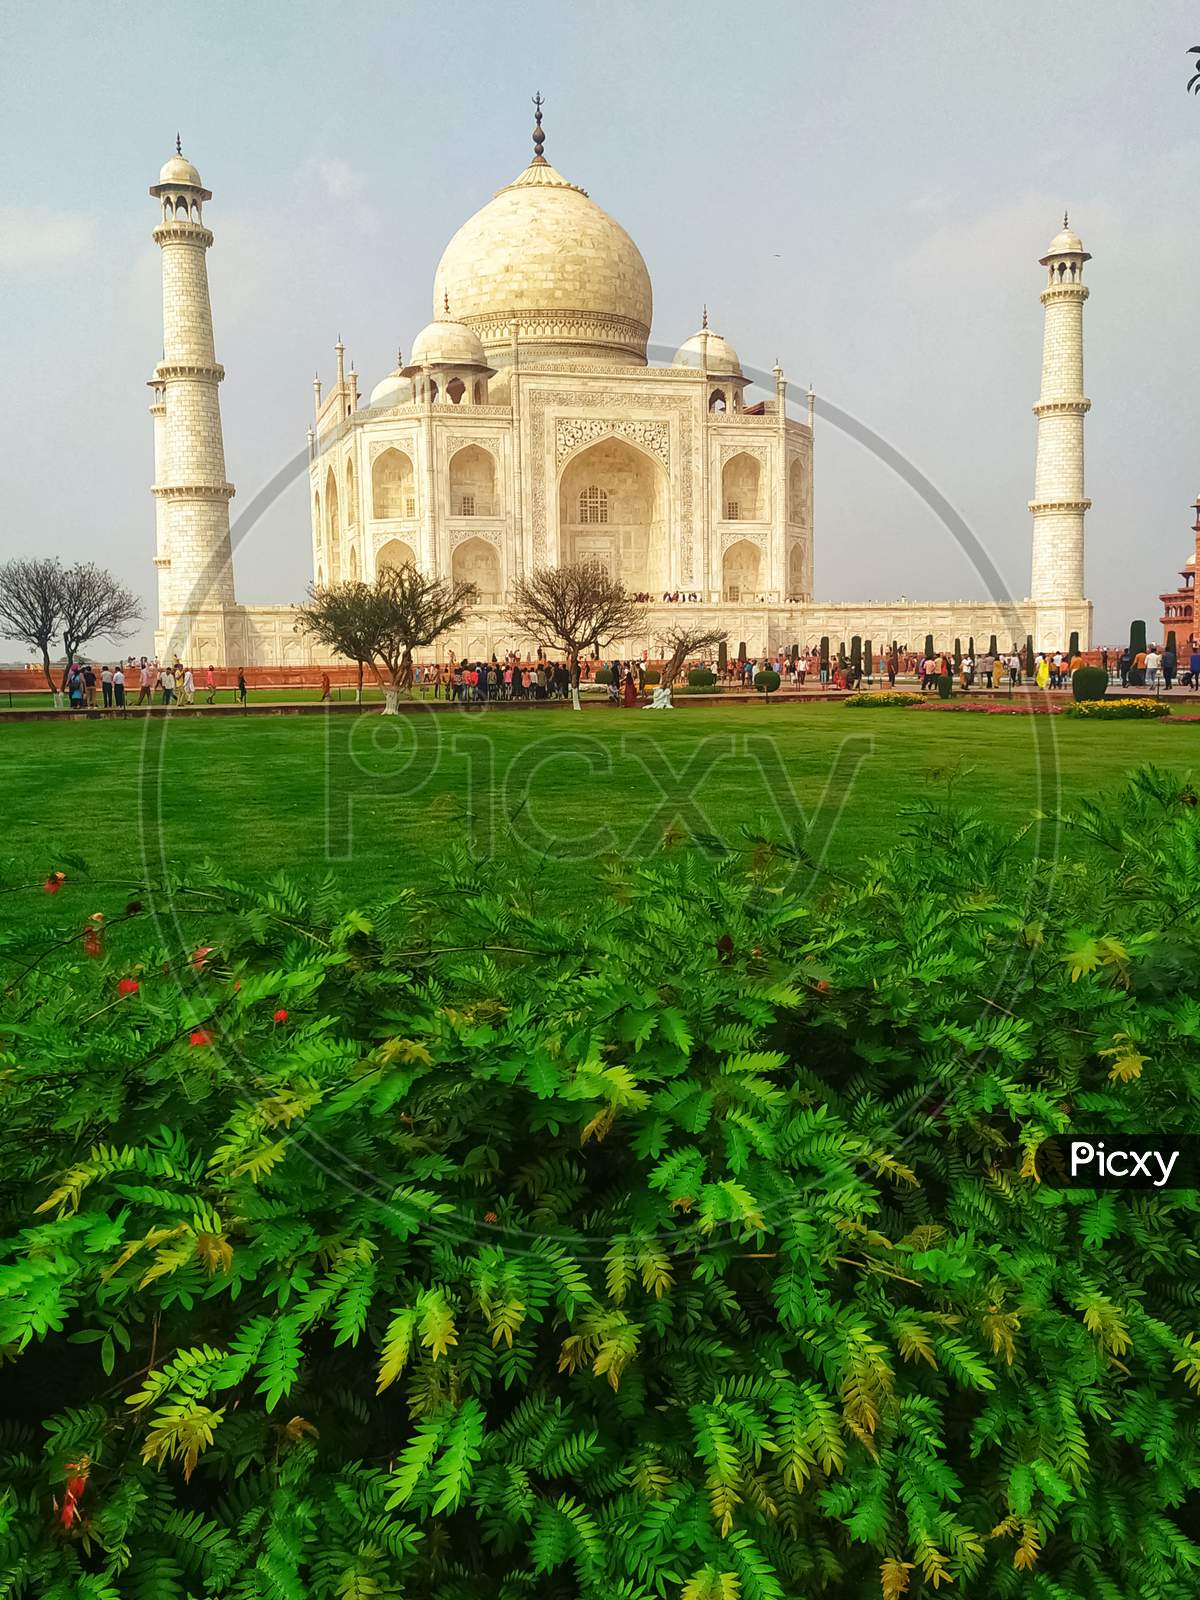 The beautiful view of Taj Mahal with green leafs of plant and greenish grass of Taj Mahal garden.